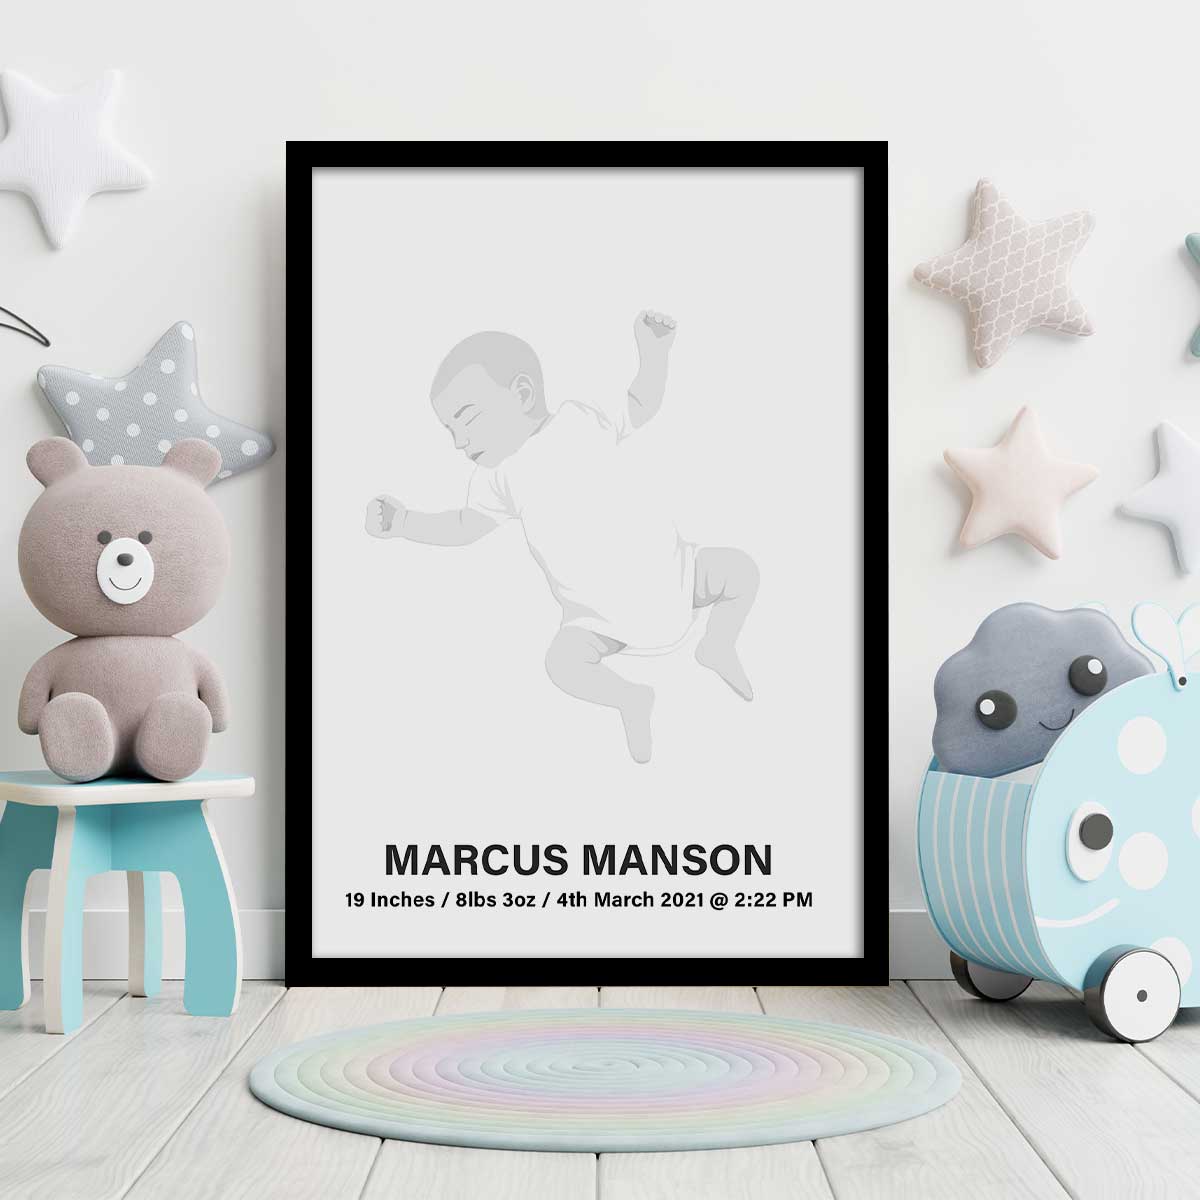 Custom Drawn Baby Portrait Framed Art - Mardonyx frames